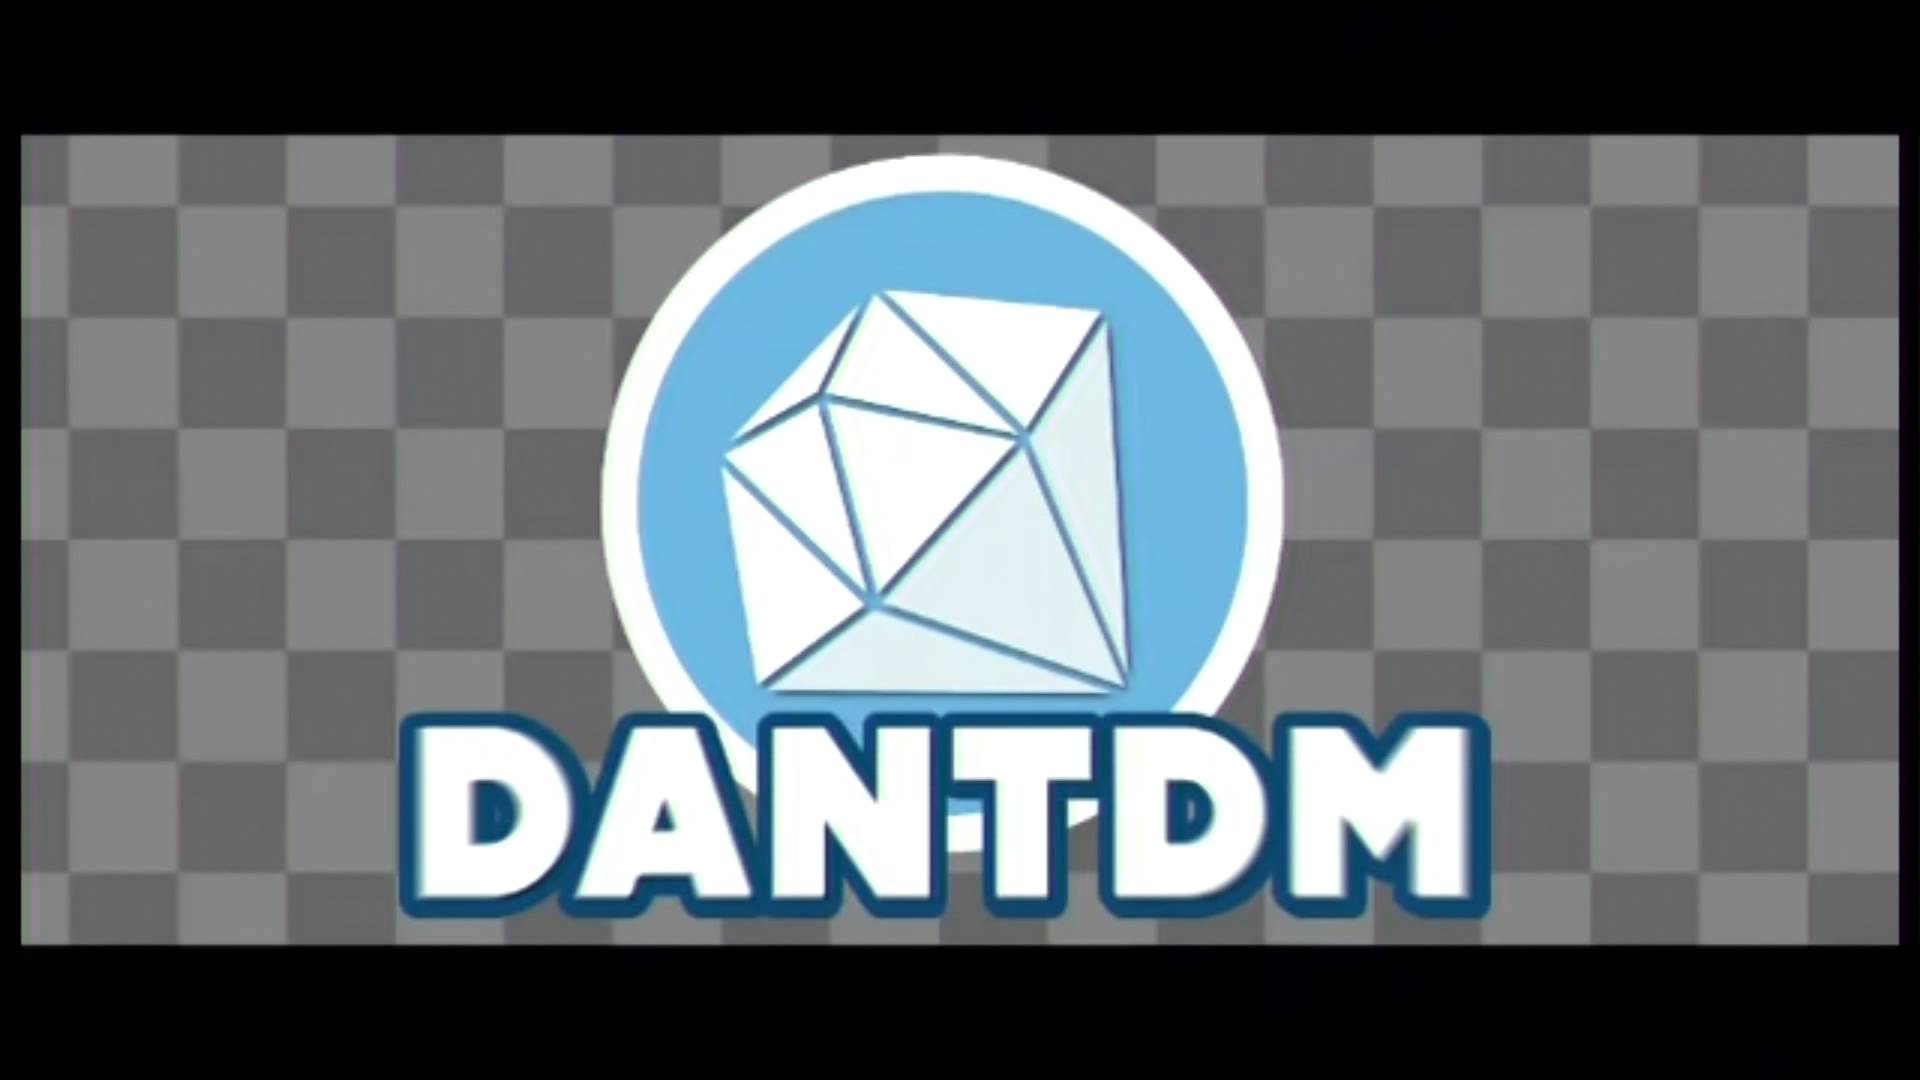 Download Minecraft Dantdm Wallpaper Hd Backgrounds Download Itl Cat - dantdm 2019 logo roblox